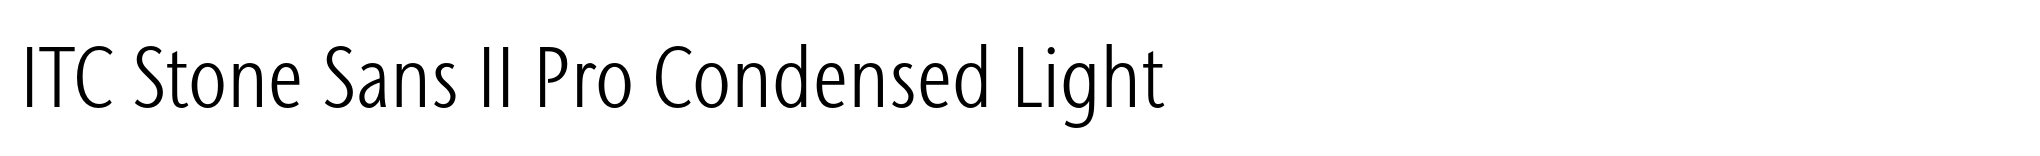 ITC Stone Sans II Pro Condensed Light image